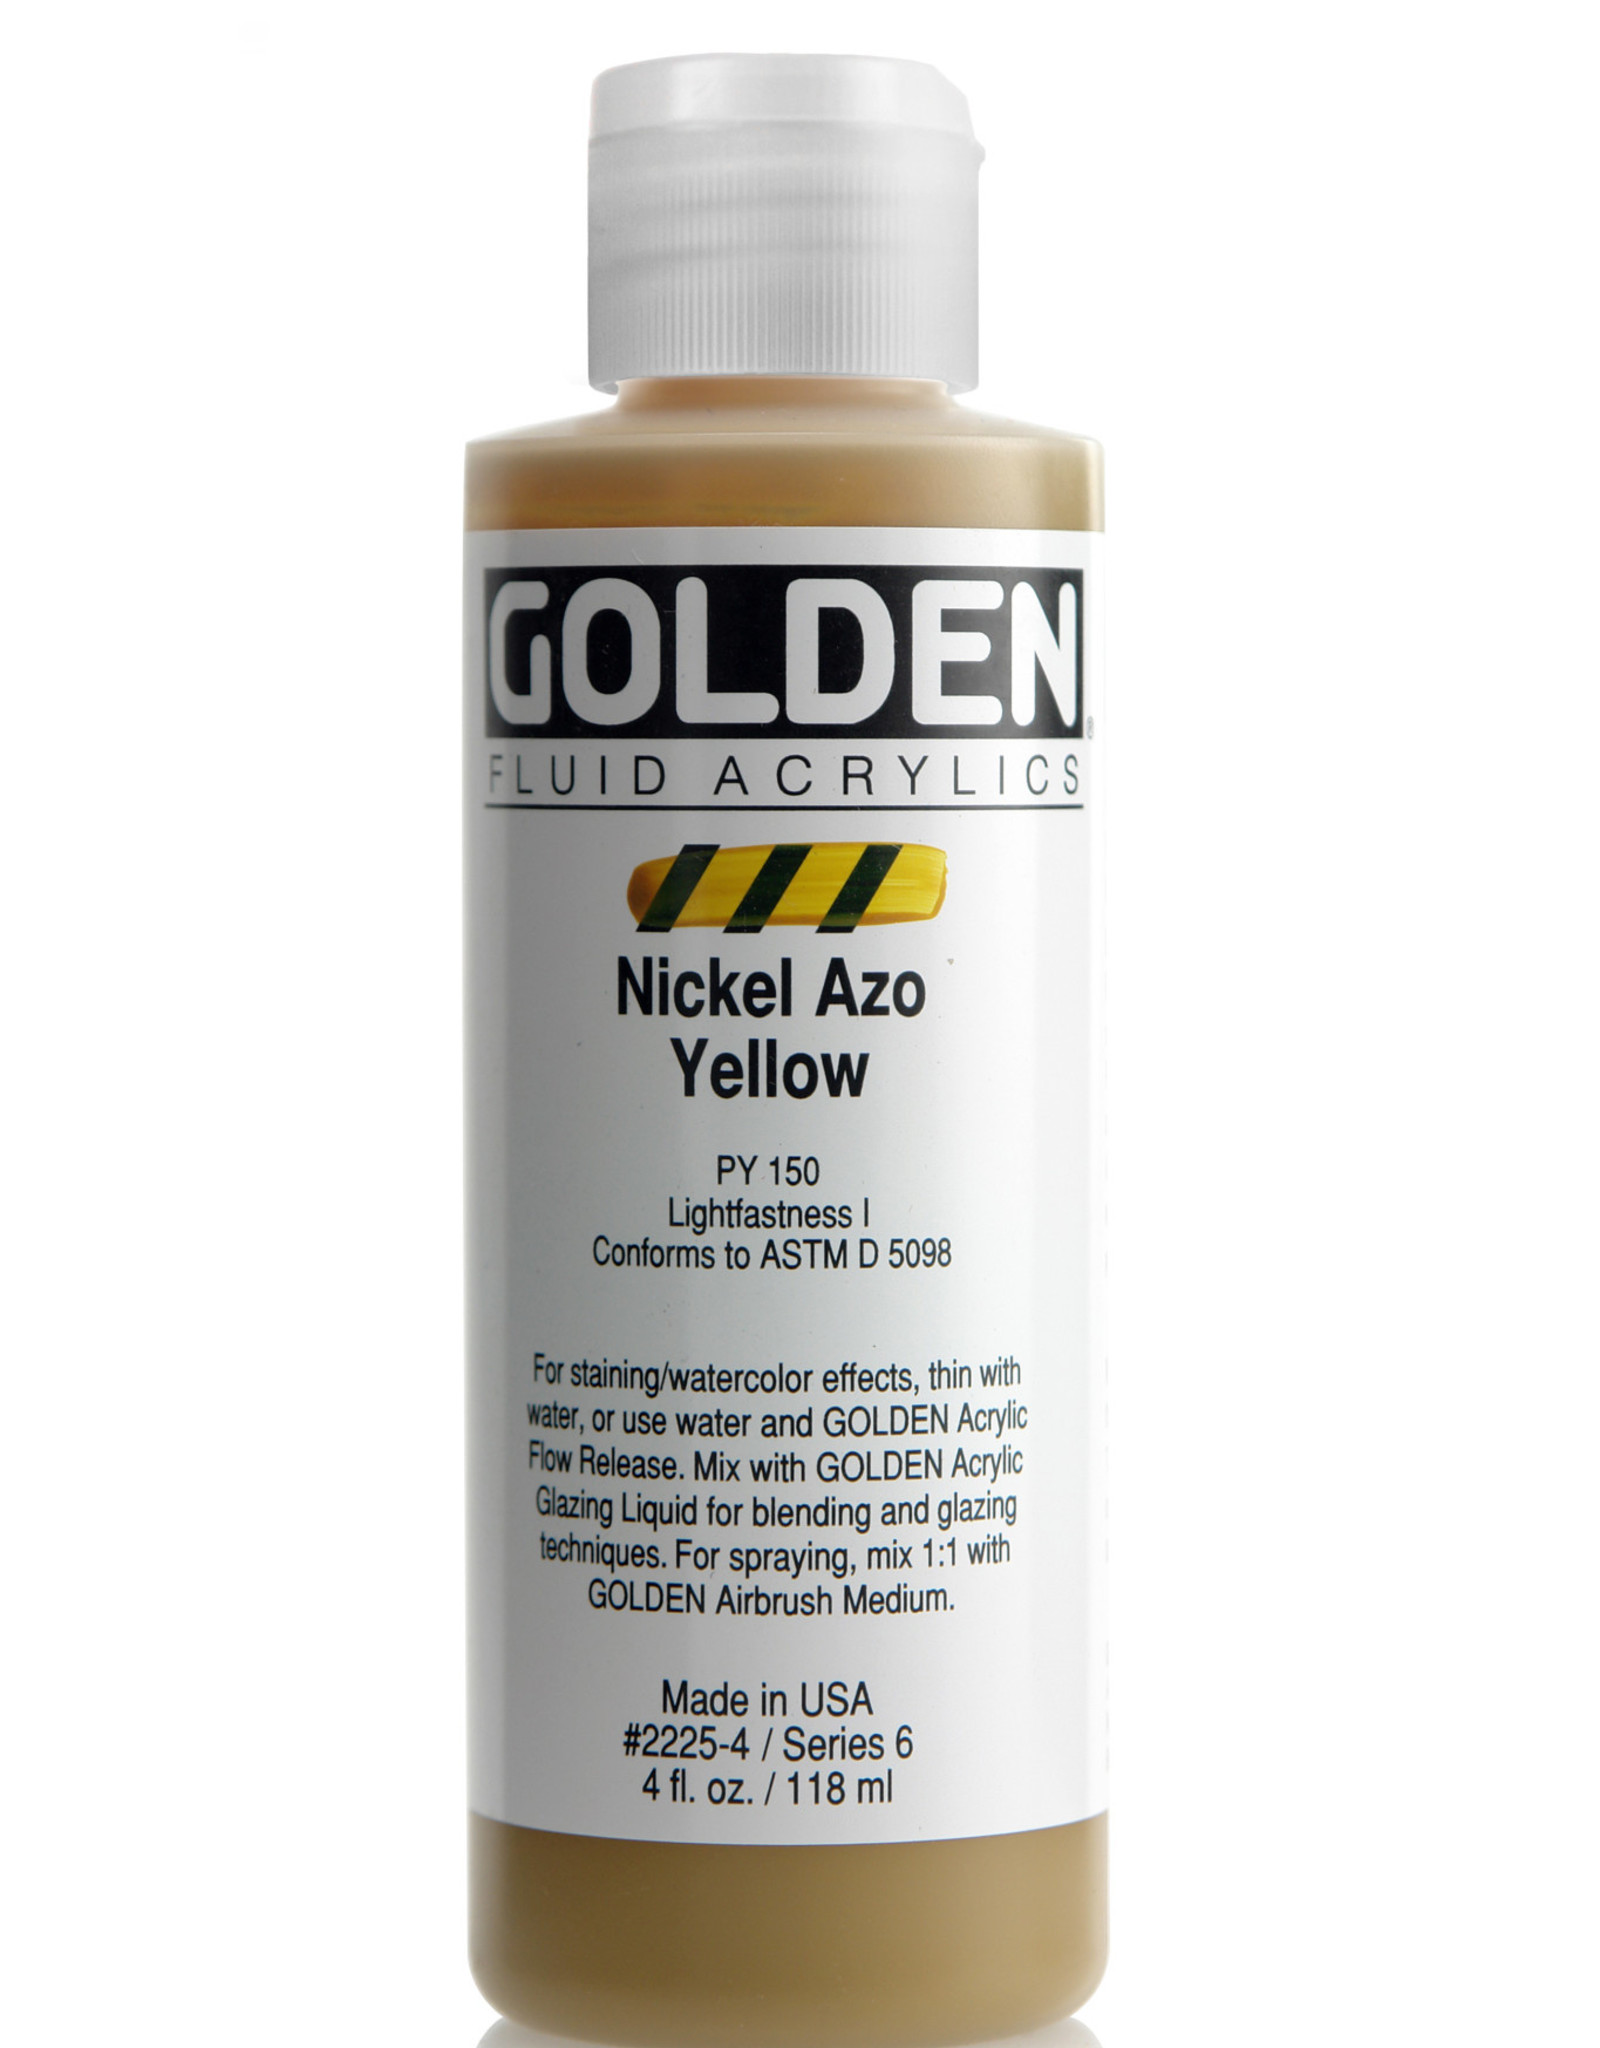 Golden Fluid Acrylic Paint, Nickel Azo Yellow, Series 6, 4fl.oz, Bottle